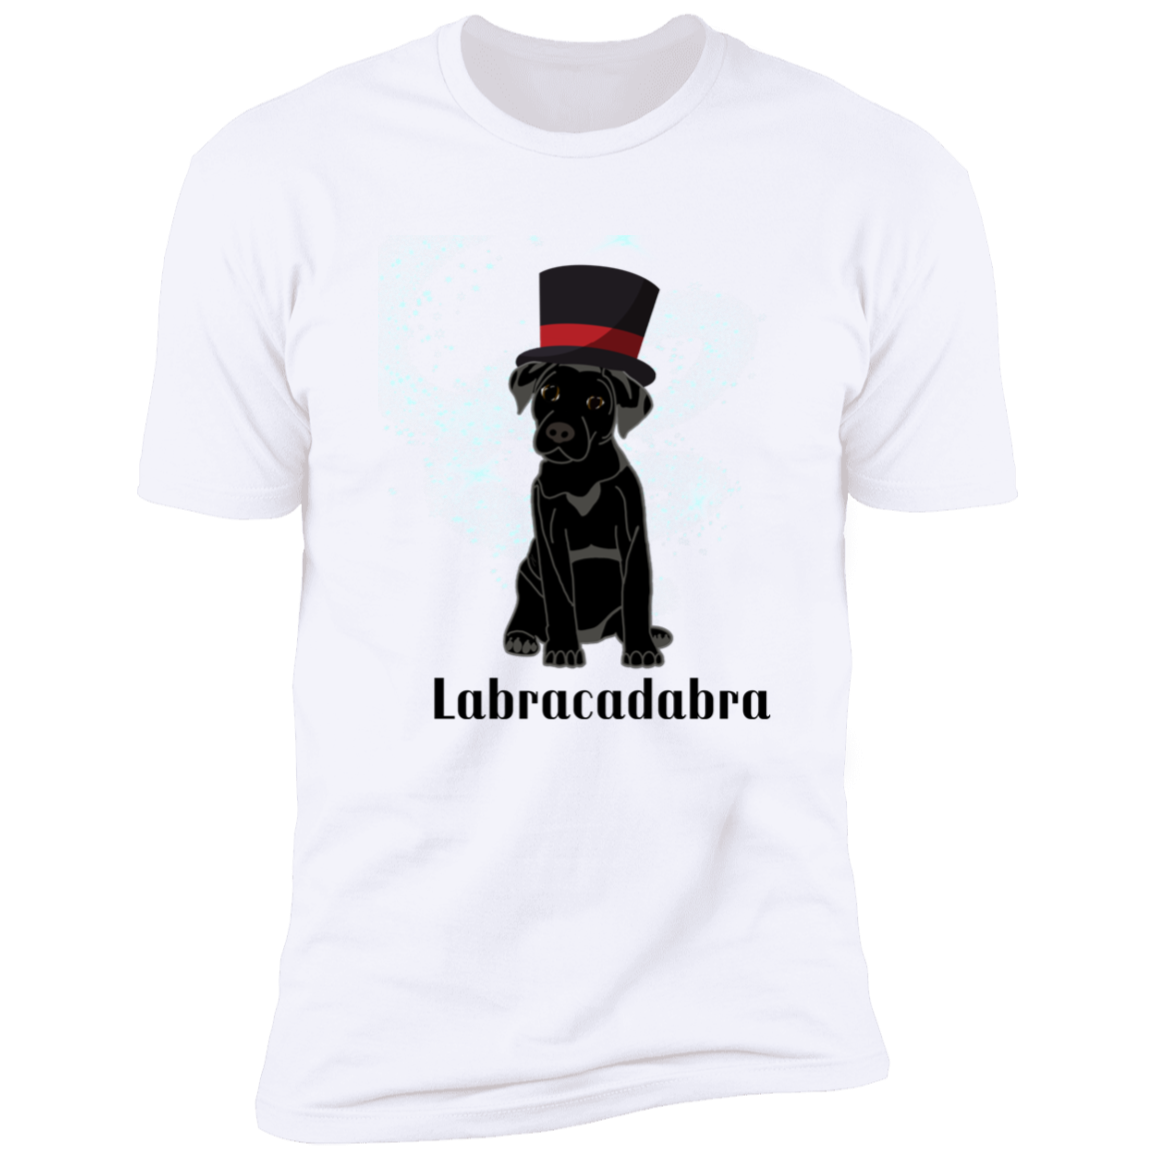 Labracadabra funny dog shirt, funny dog shirt for humans, funny labrador shirt. in white